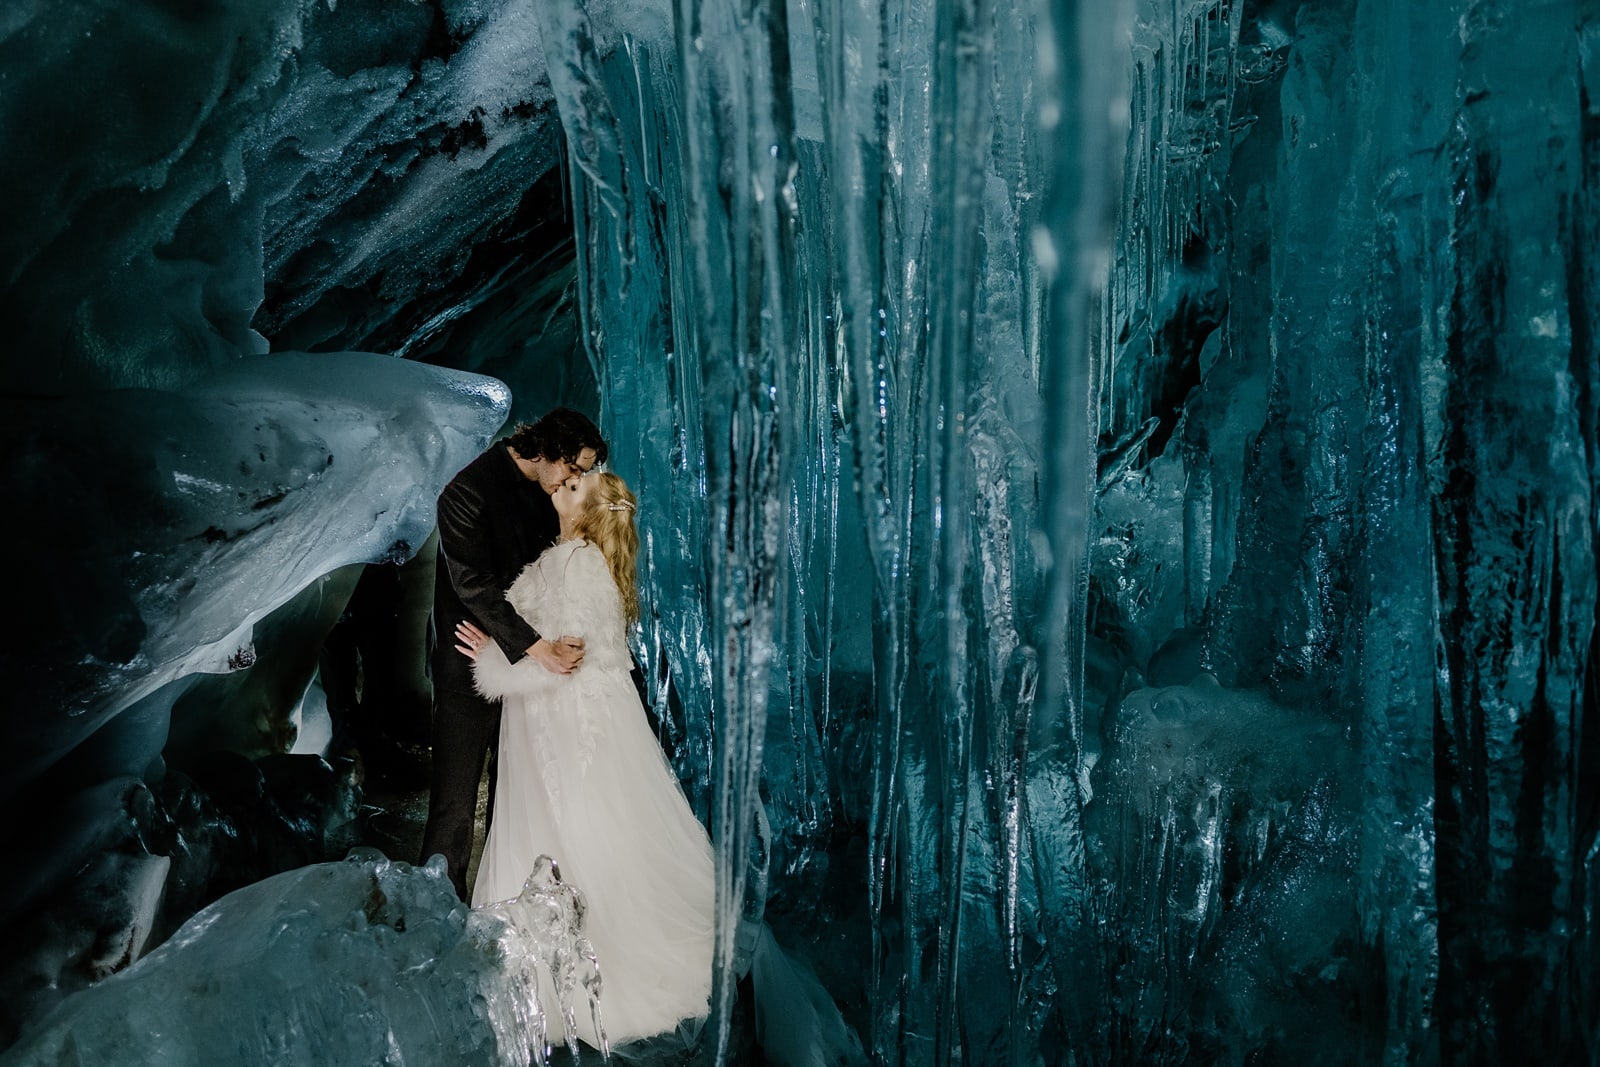 Glacier Ice Cave Elopement in Austria – Amy & Cody